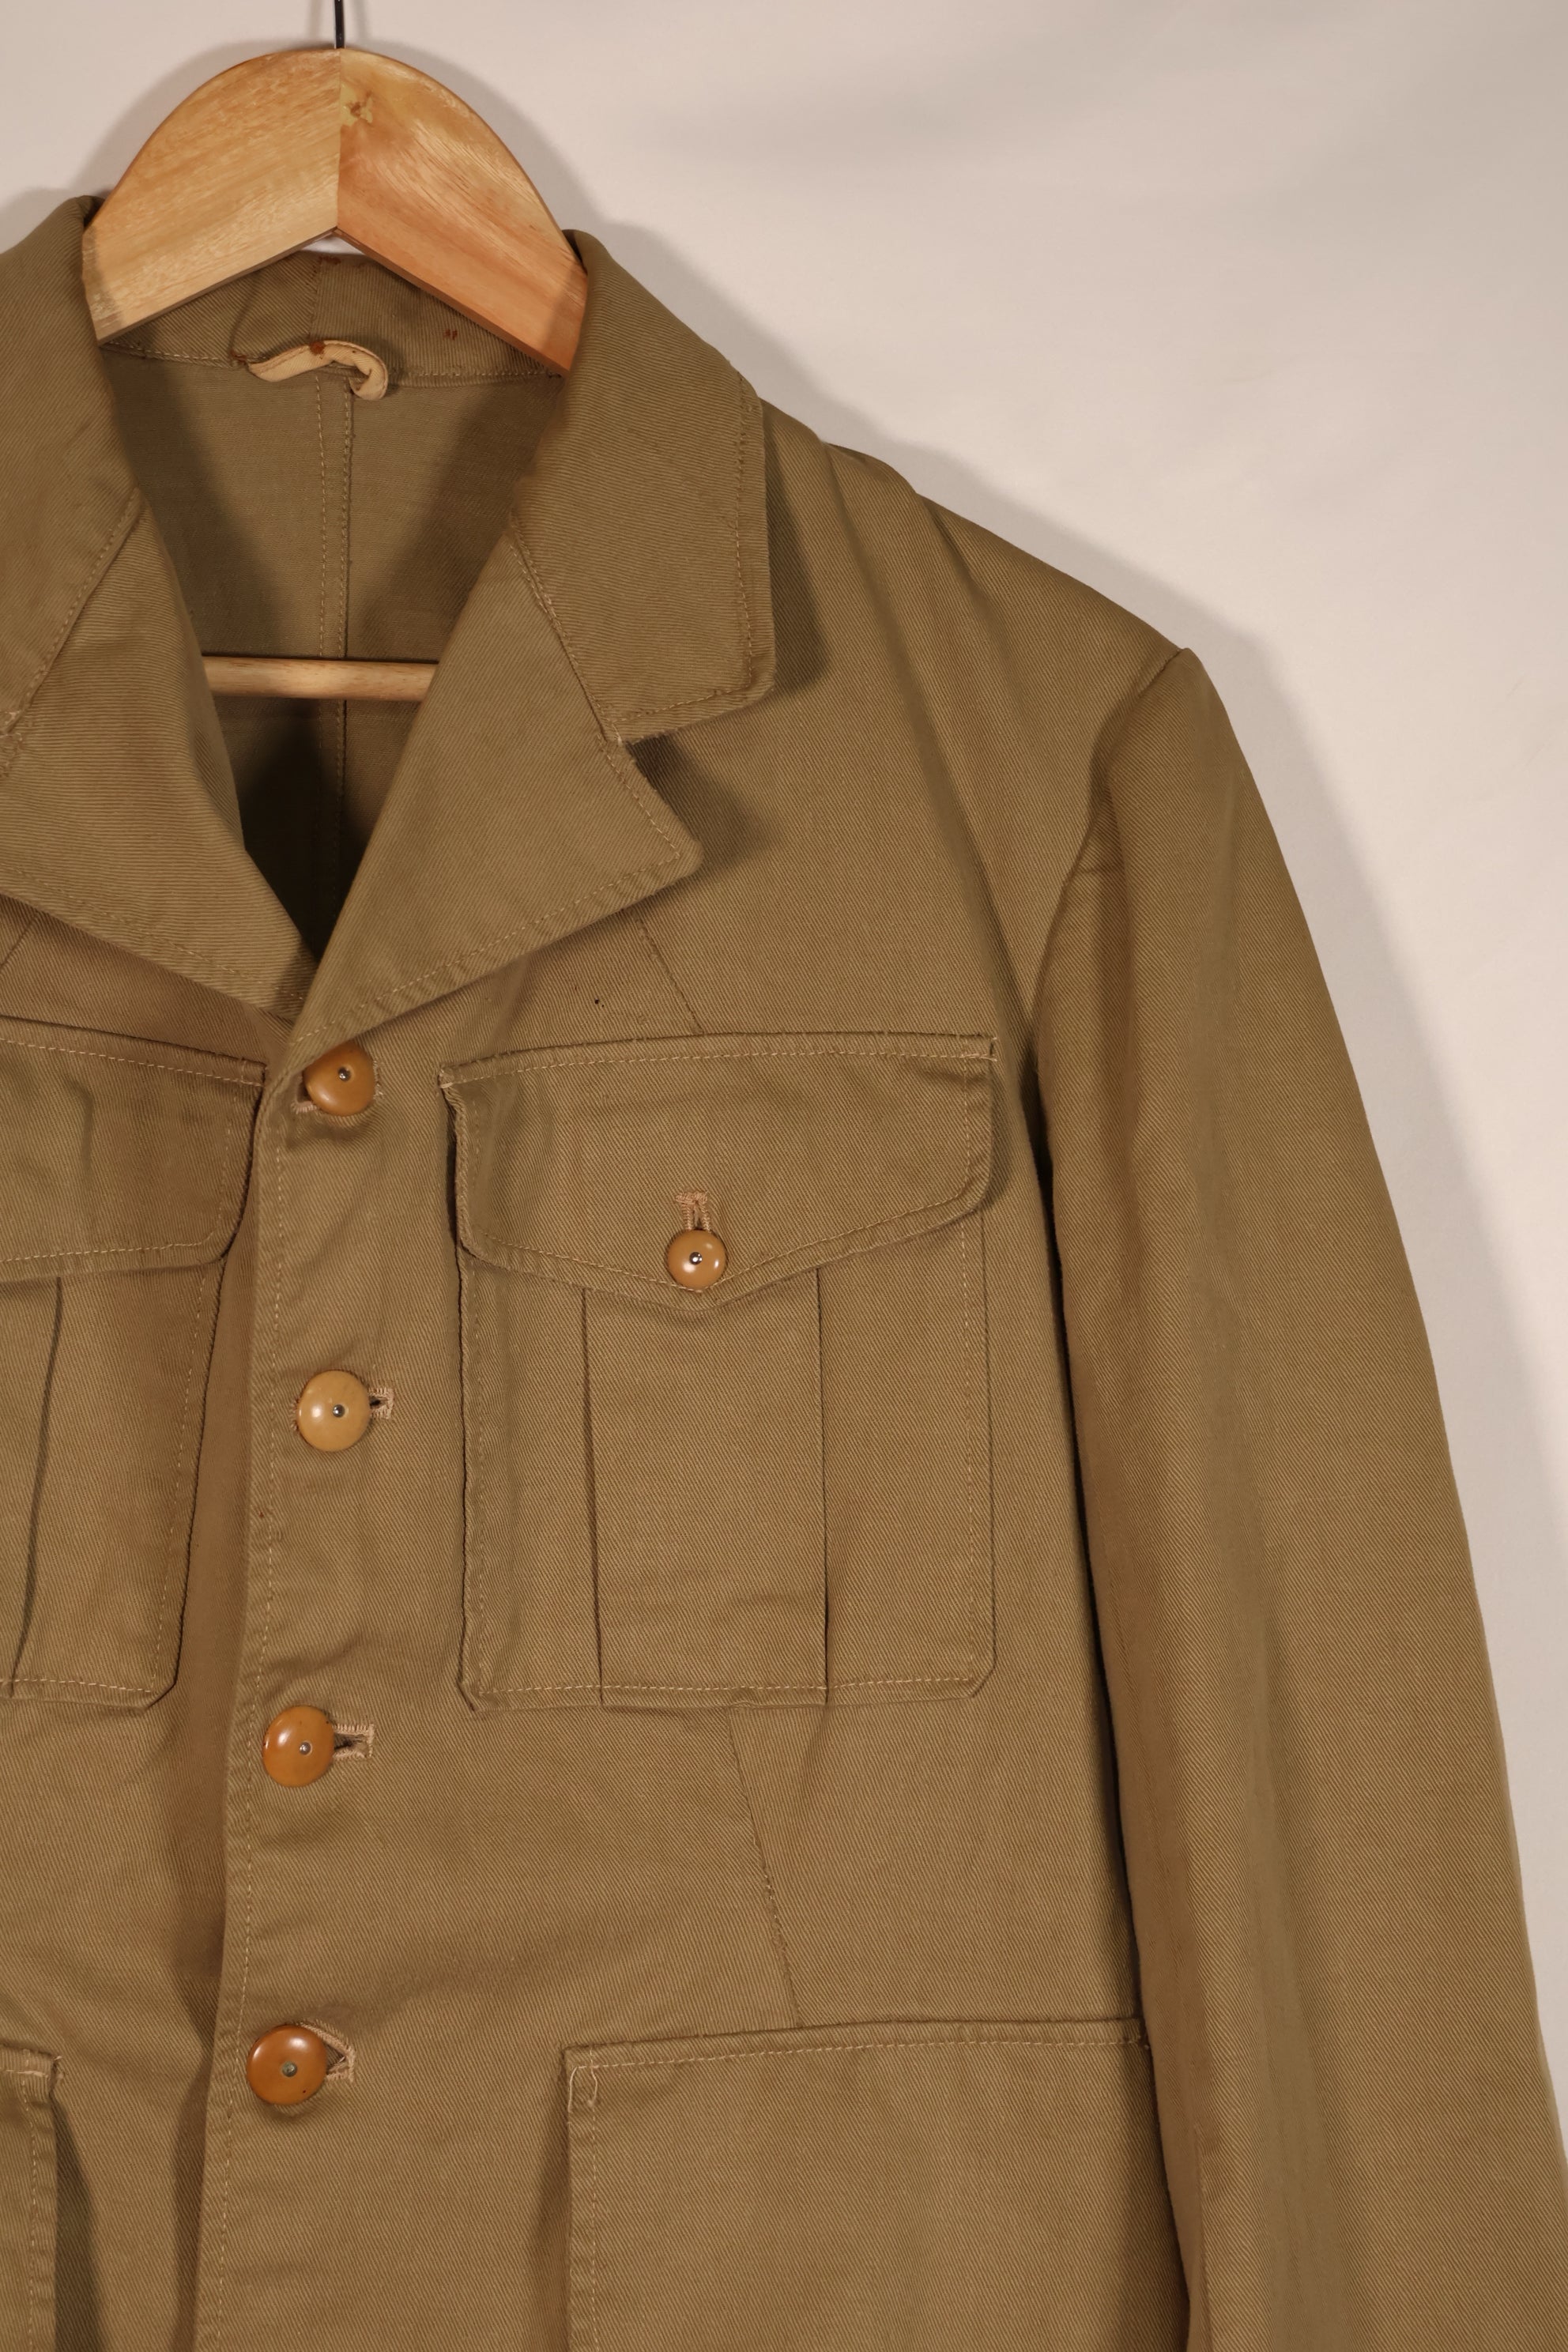 Real 1941 WWII Australian Army Tropical Jungle Uniform Used